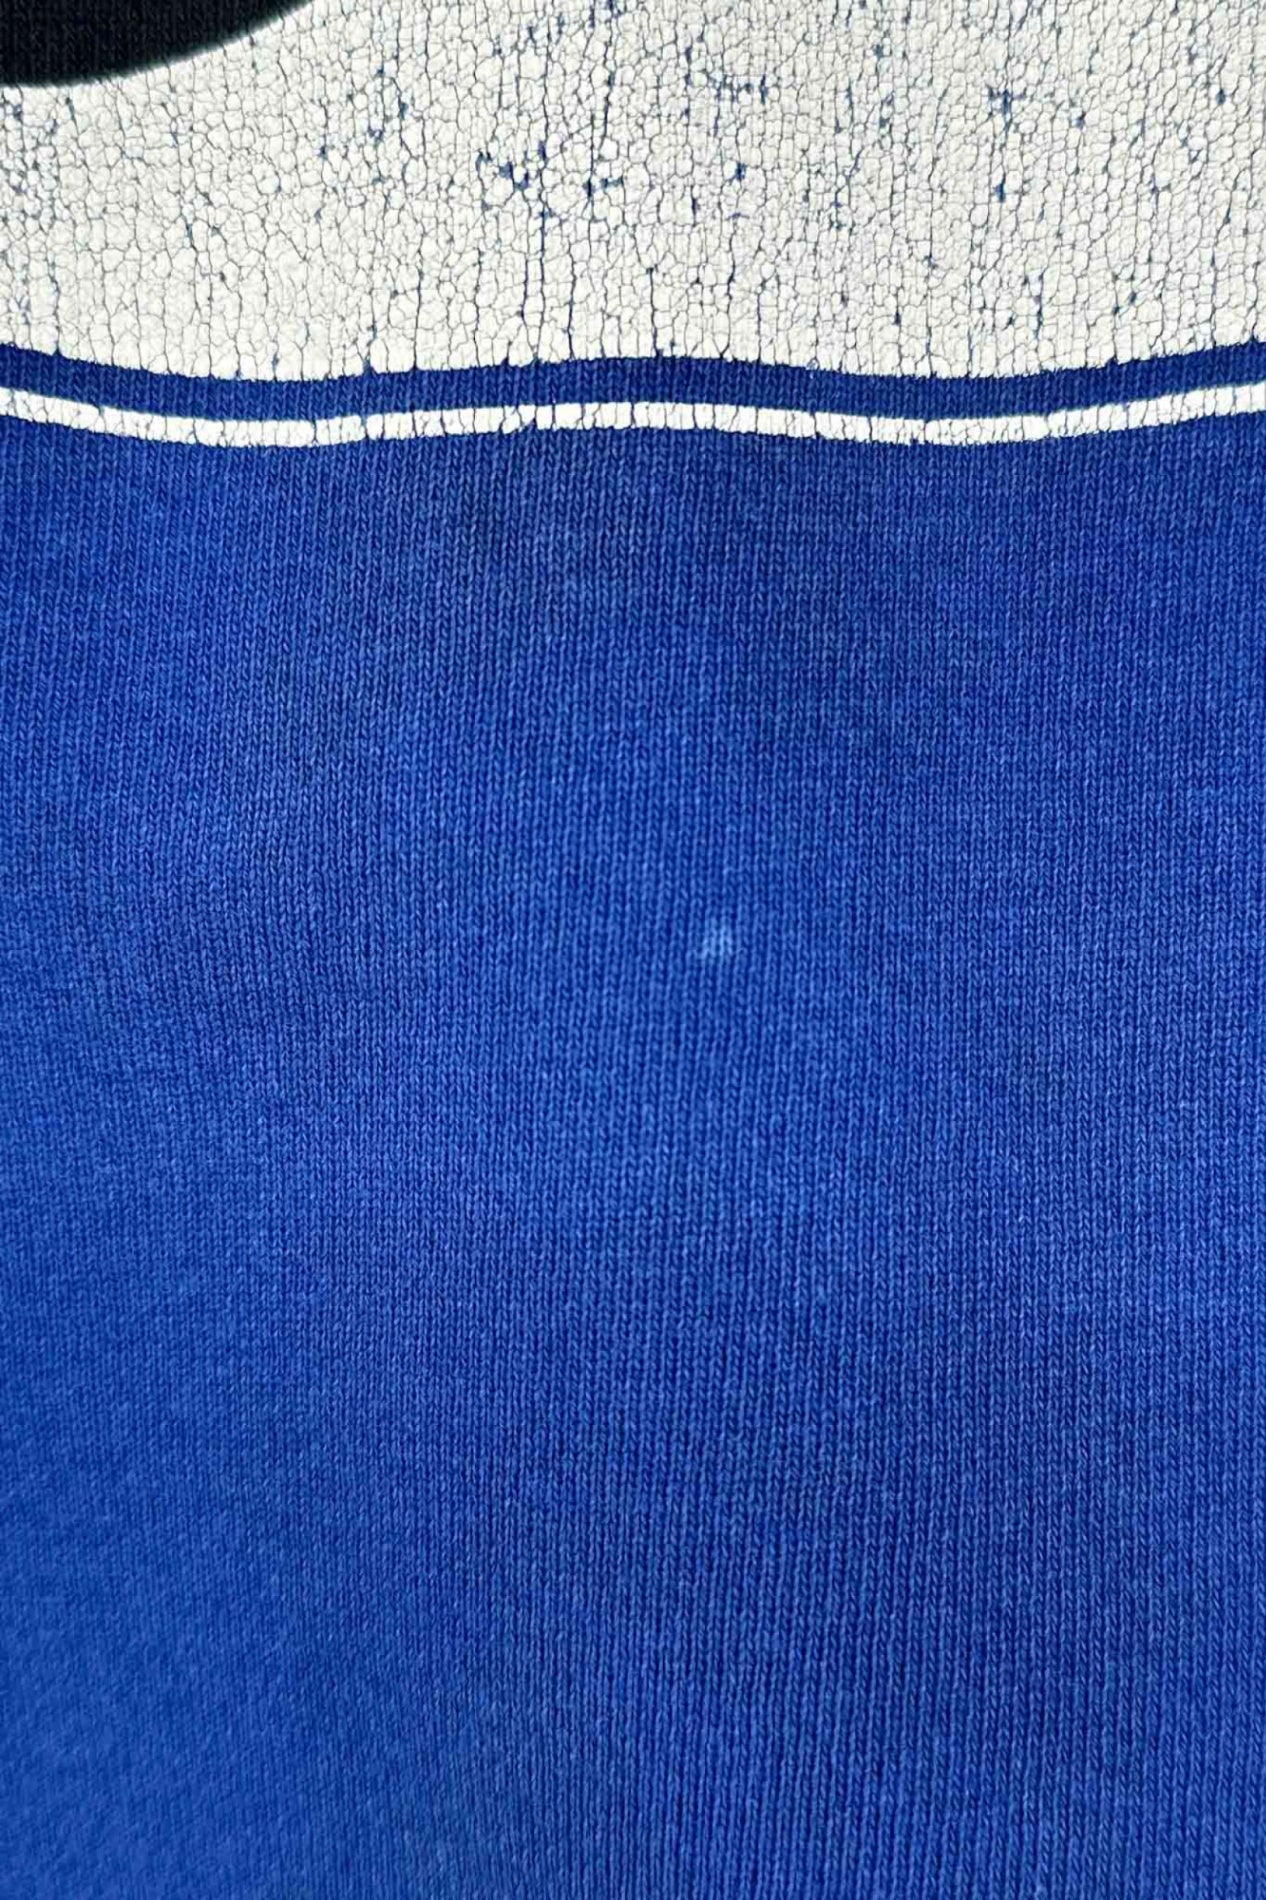 90's Made in USA NIKE blue sweat